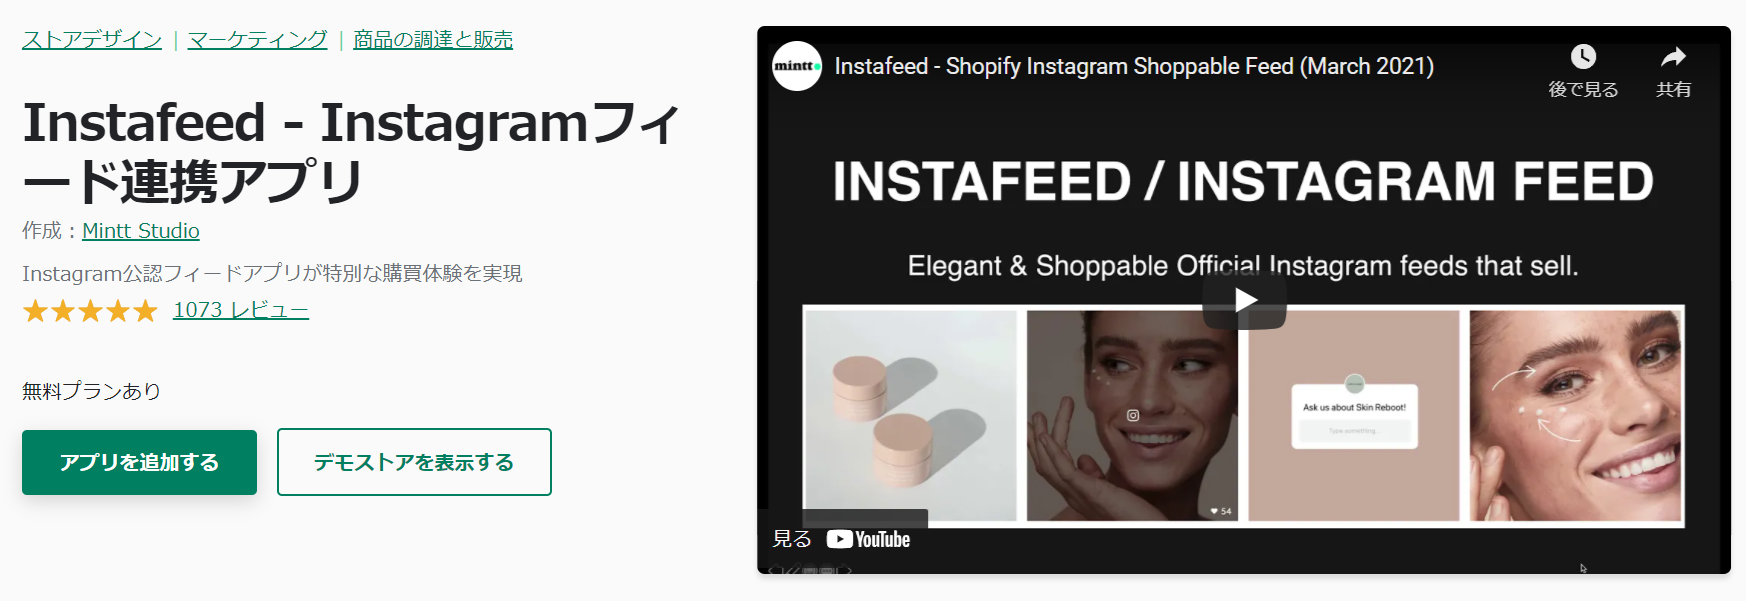 Instafeed ‑ Instagram Feedの画像